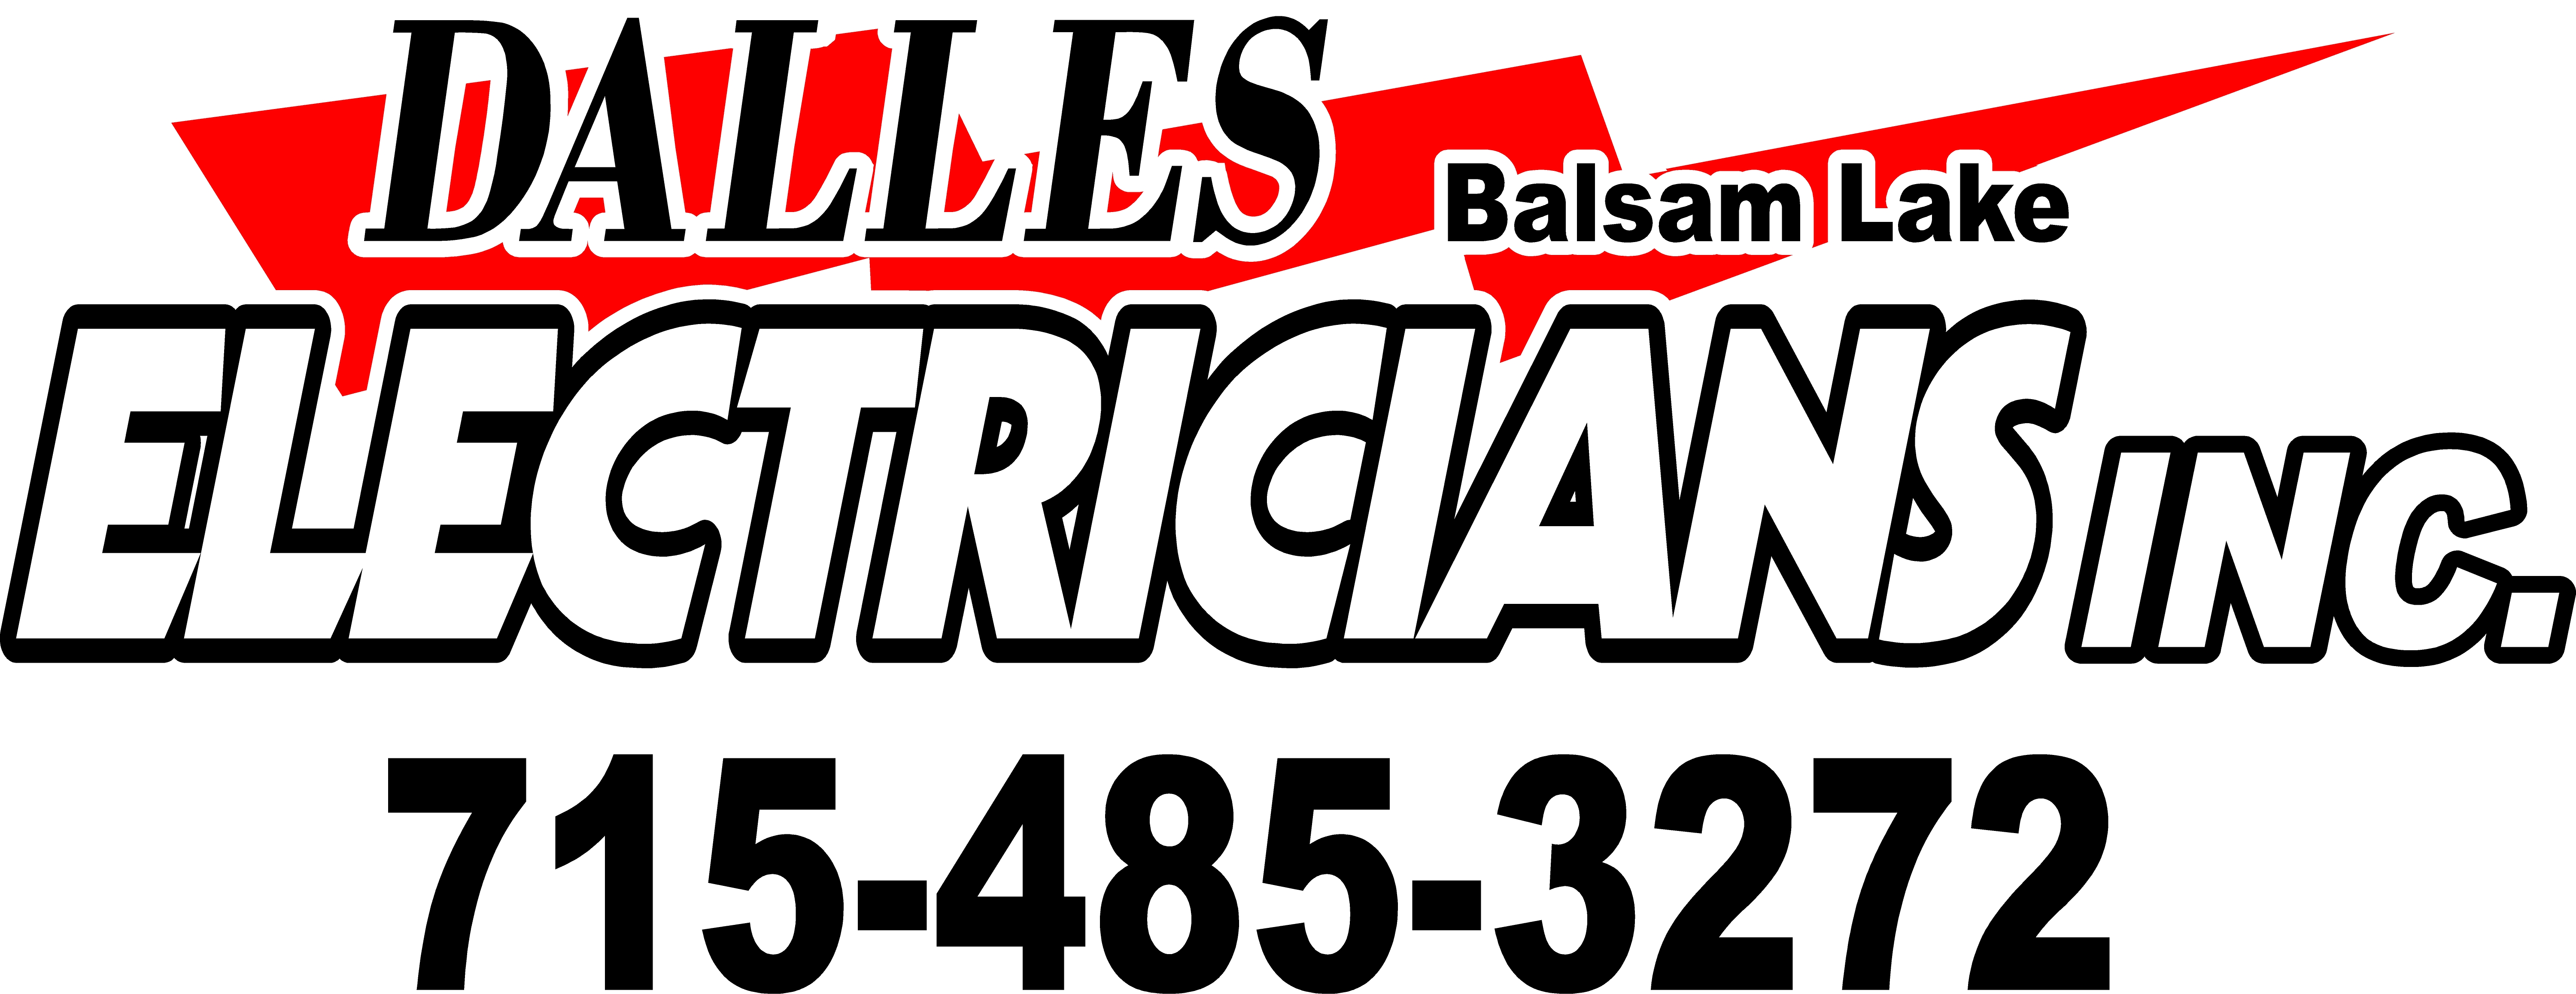 Dalles Electricians, Inc. Logo